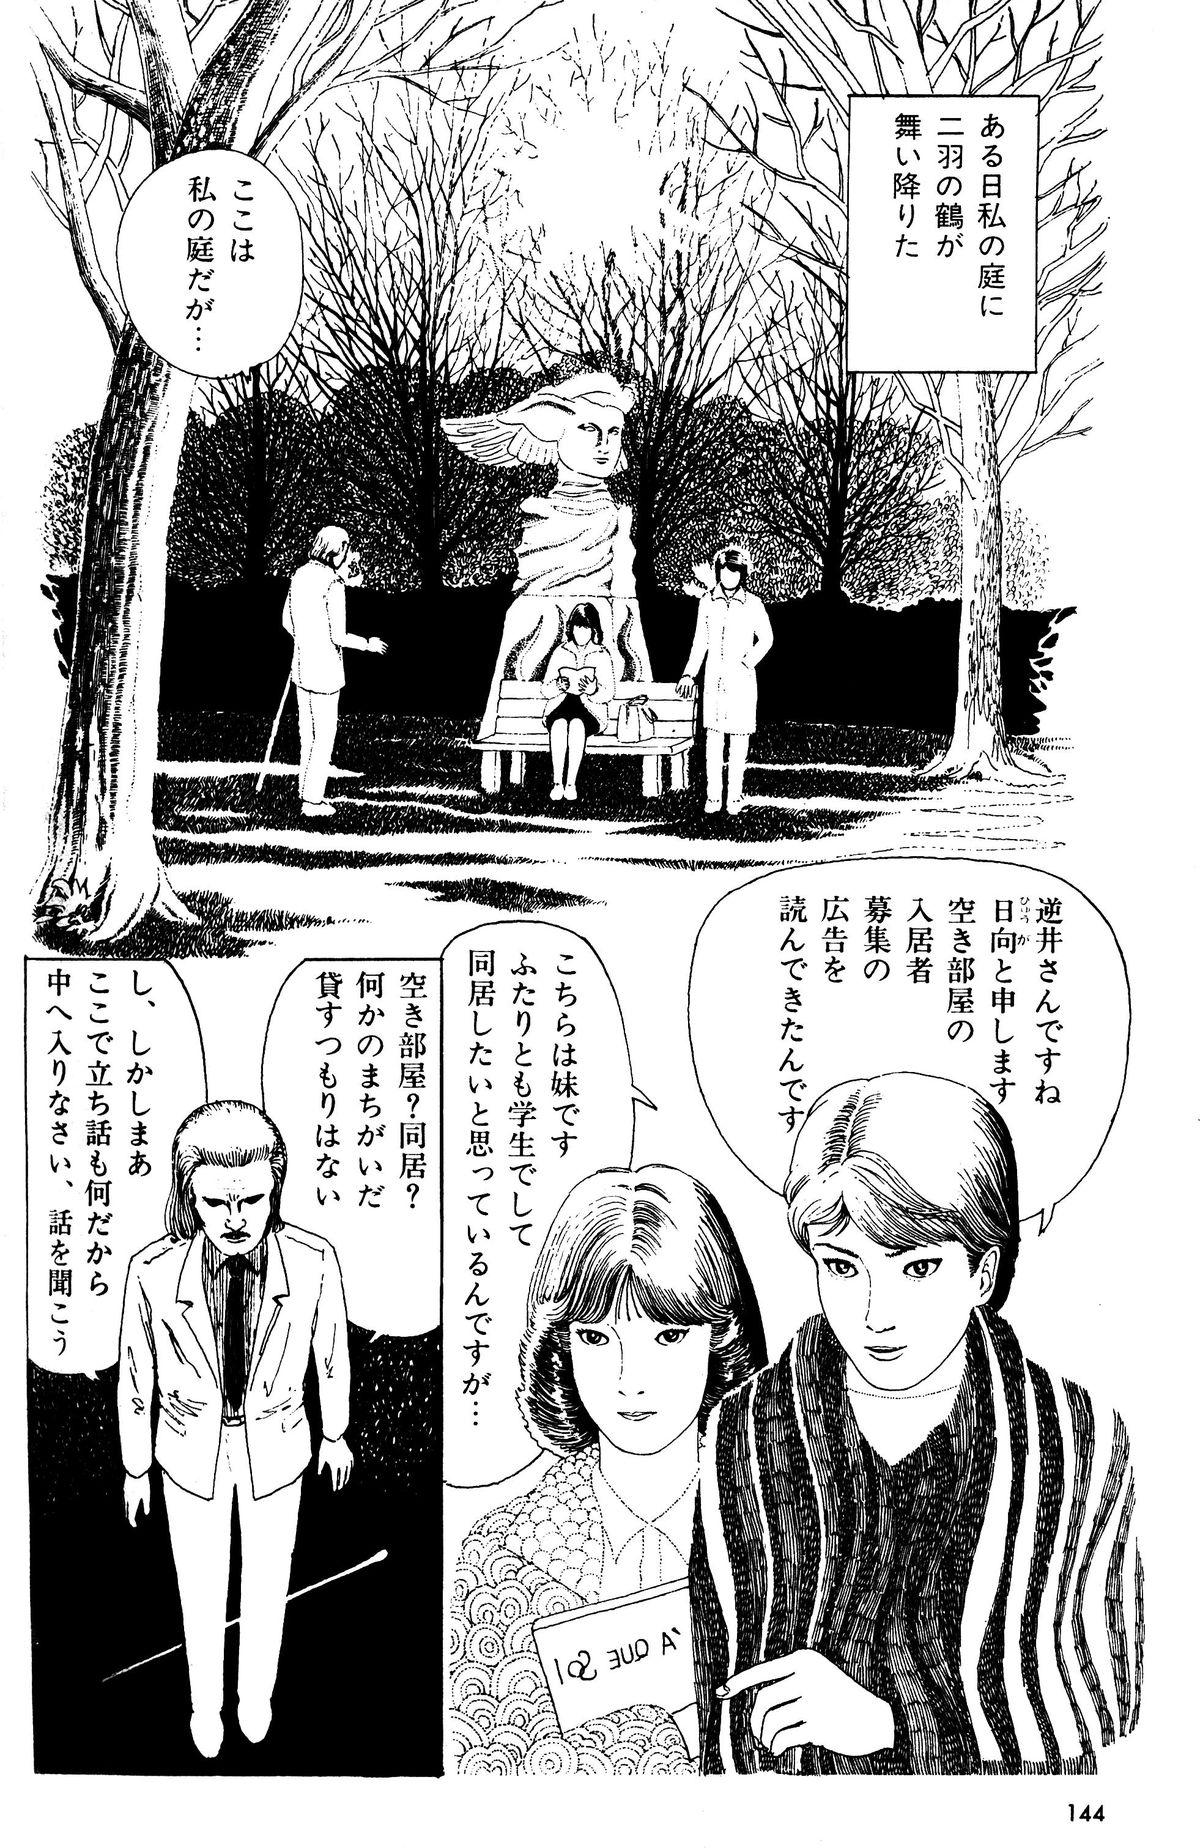 Melon Comic No. 01, メロンコミック 昭和59年6月号 145